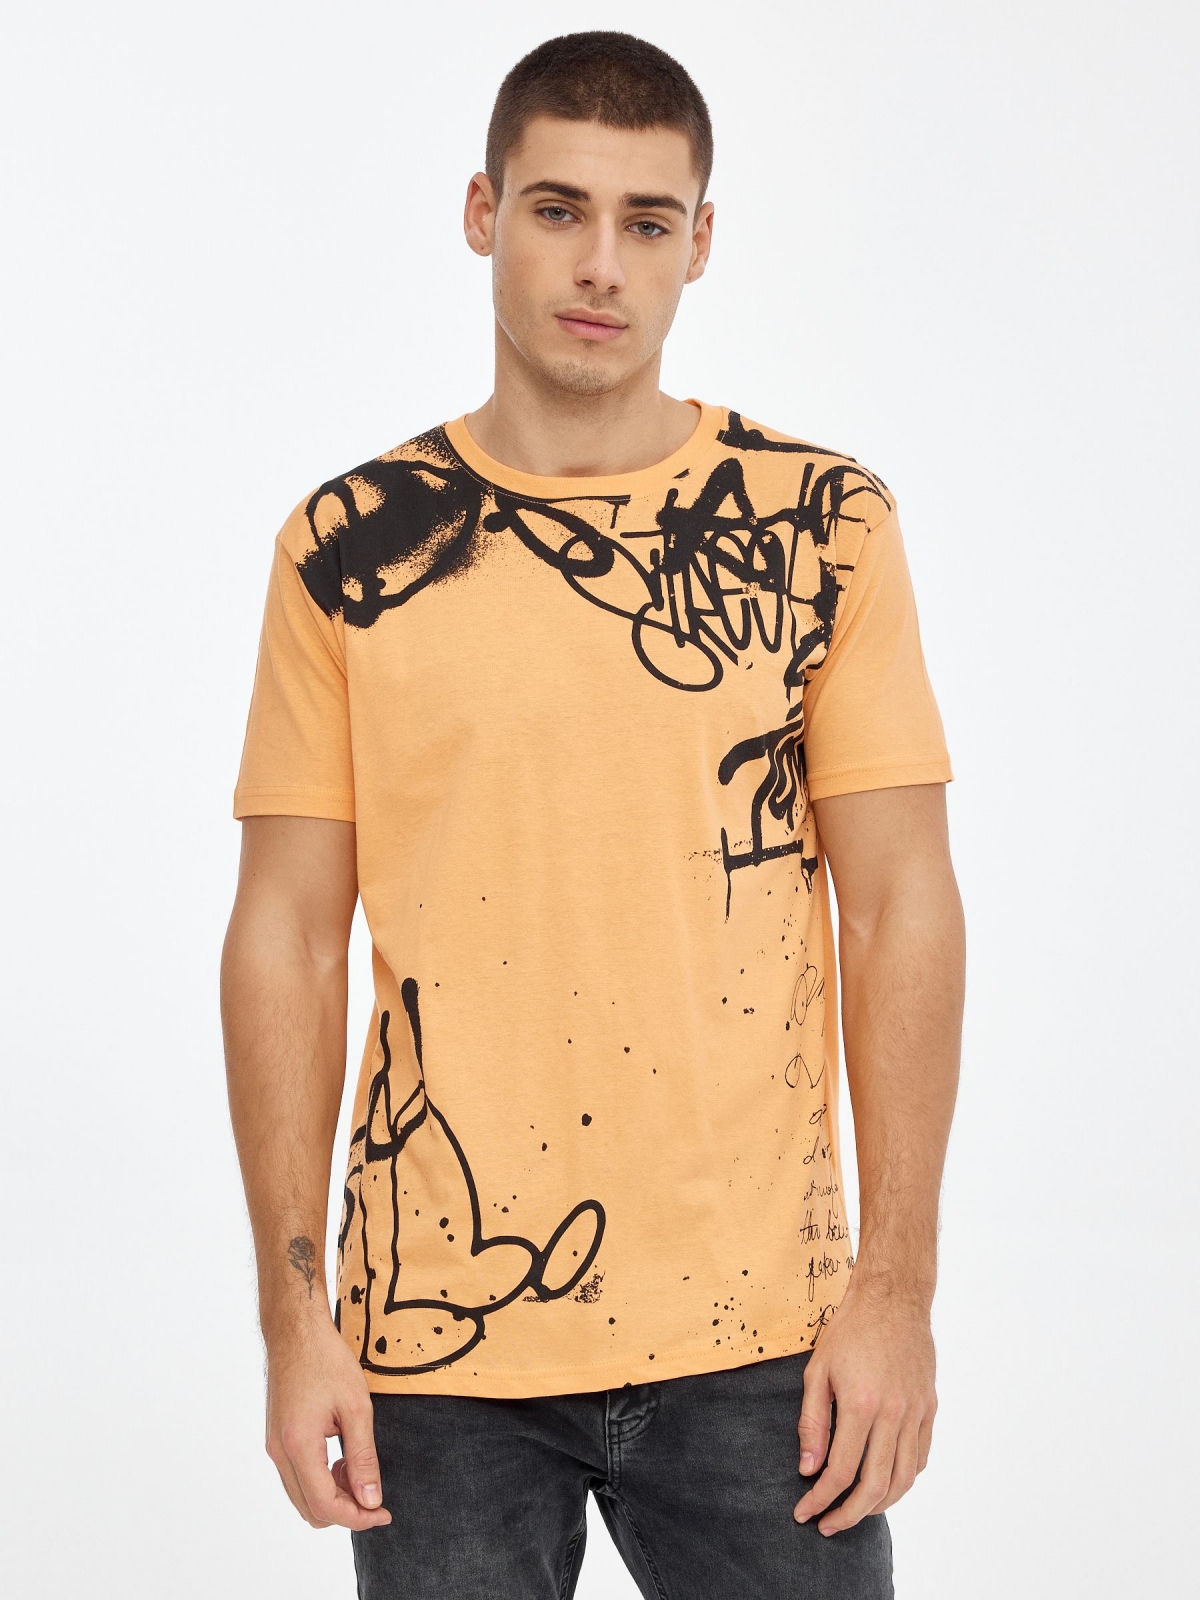 Camiseta estampado graffiti salmón vista media frontal